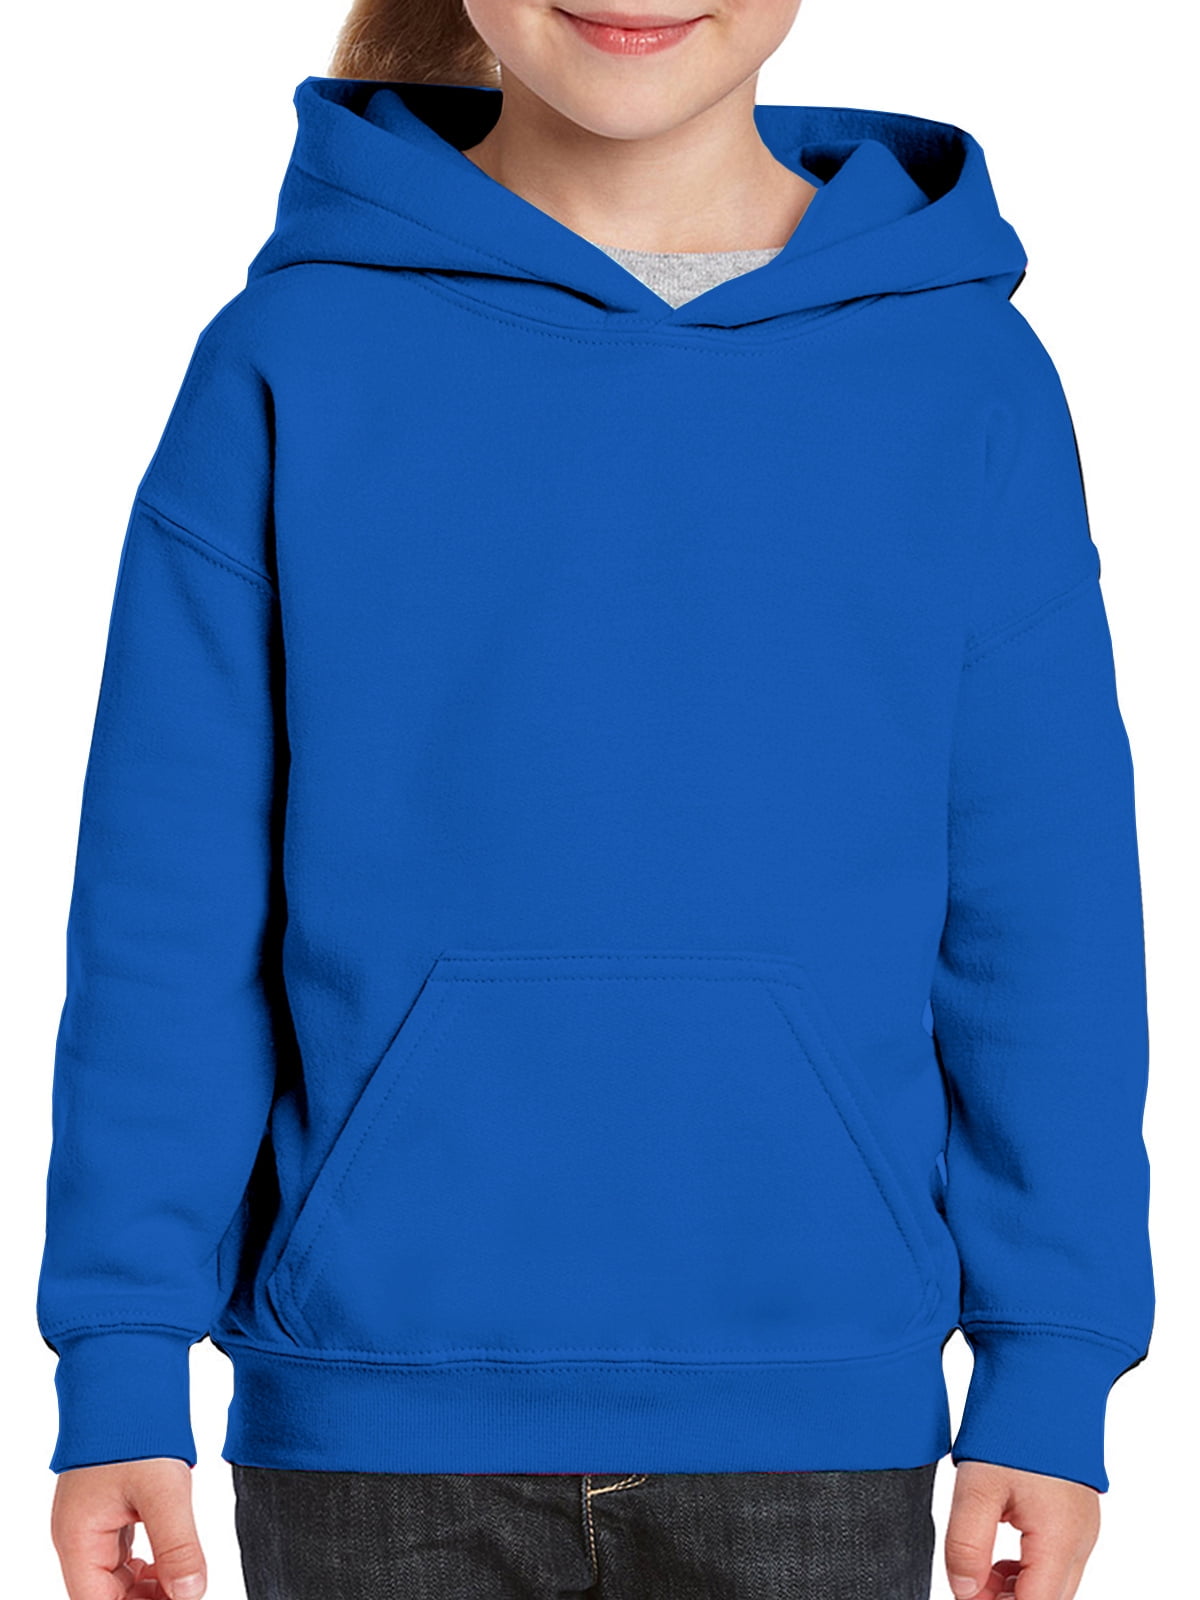 Hoodies for Teens Hoody for Boy Girls Size 6-8 10-12 14-16 18-20 - S M L XL  - Age 6 to 20 Years Old Kids Hoody Blue Youth Hoodie Kid Pullover Hooded  Sweatshirt